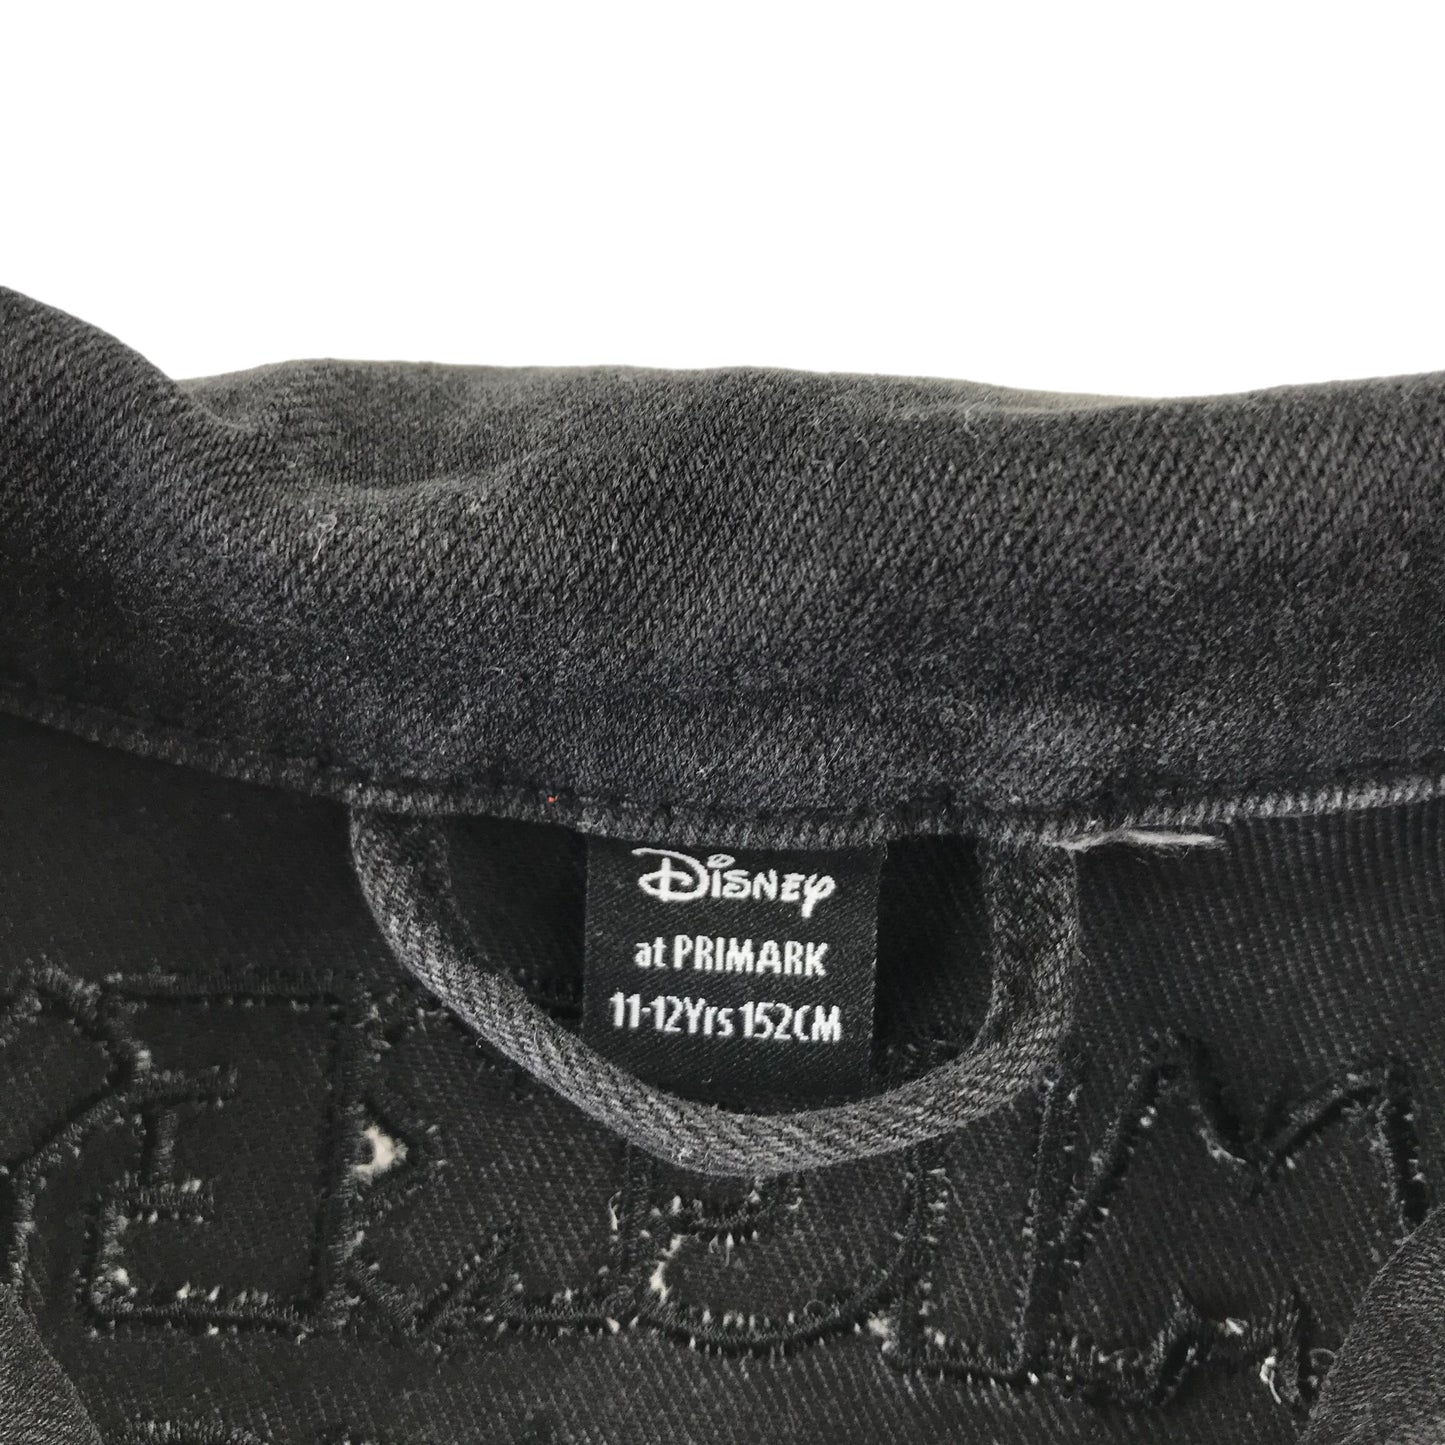 Primark denim jacket 11-12 years charcoal grey Disney Mickey Mouse